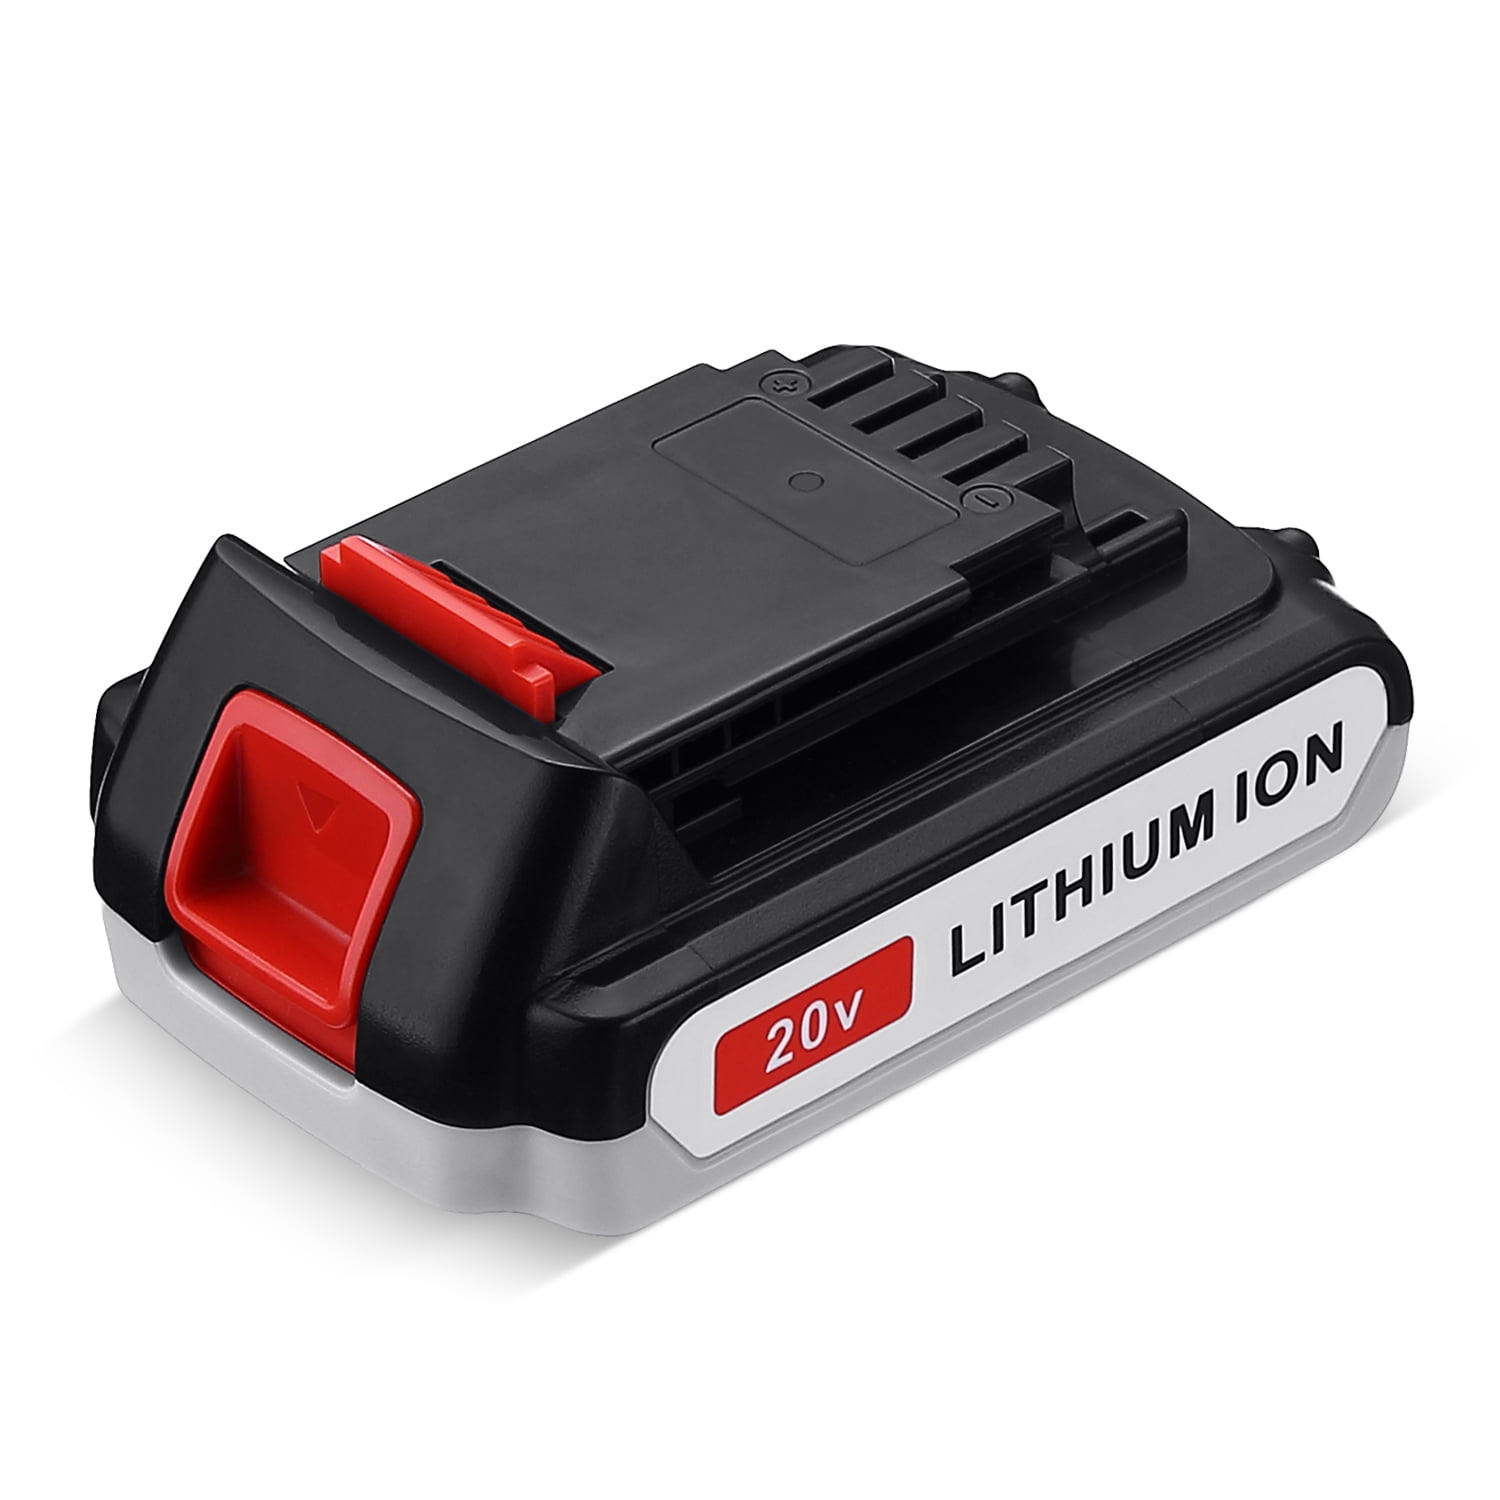 20V 1.5AH Lithium-Ion Battery for Black & Decker 20 Volt LB20 LBX20 LBXR20  3.0Ah